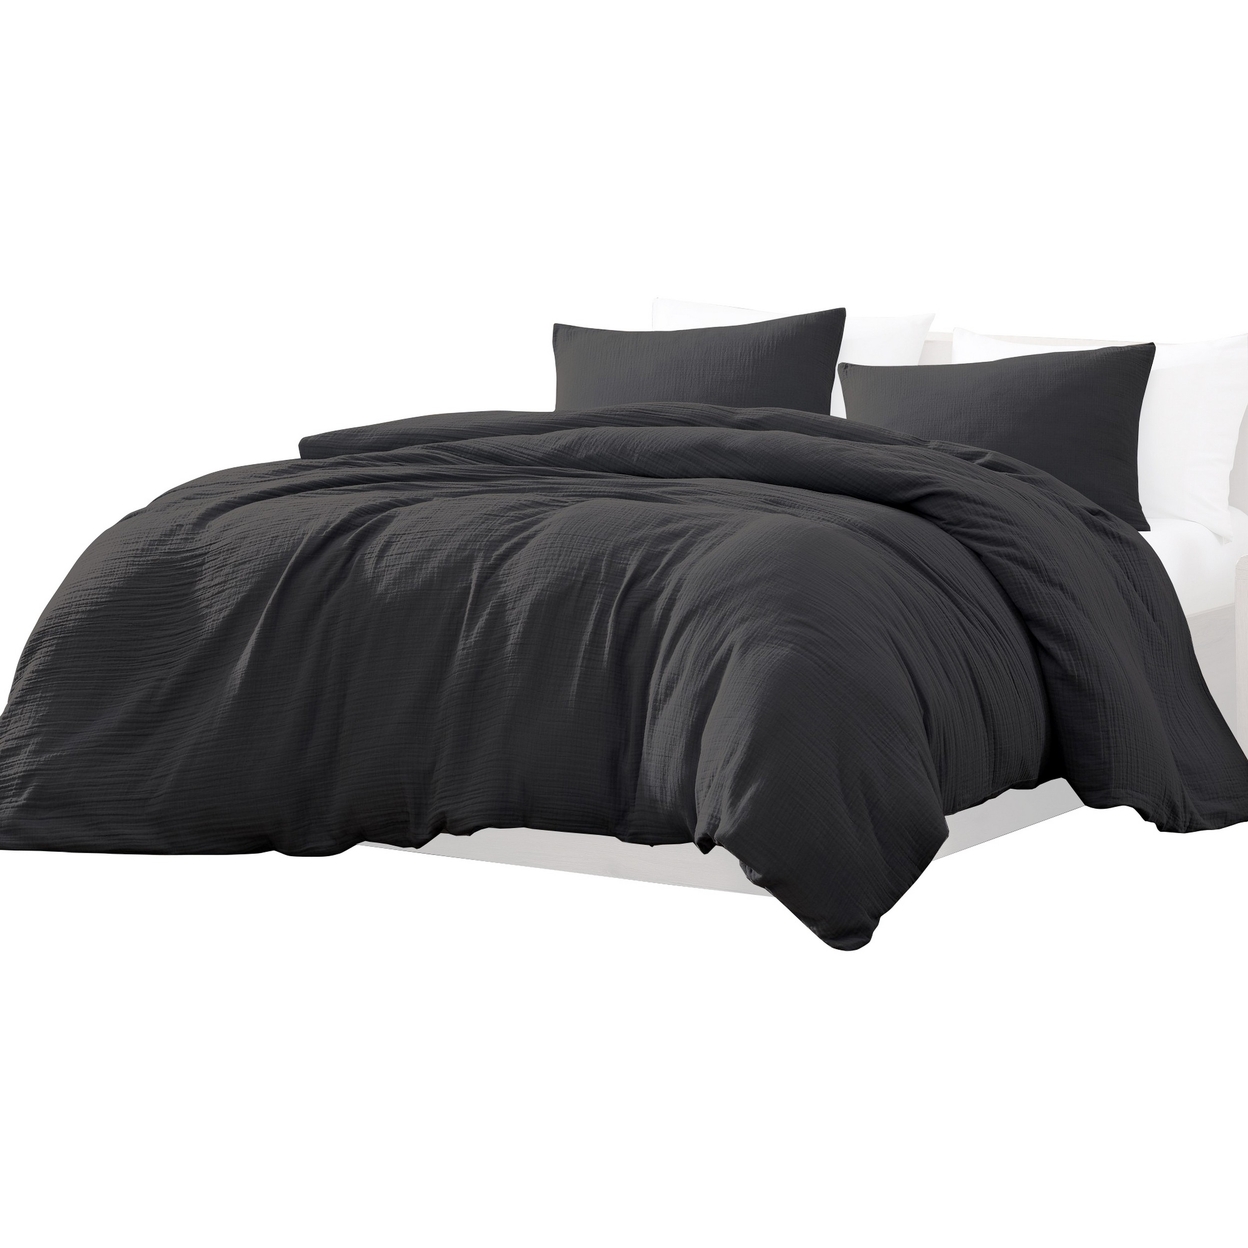 Uvi 3 Piece King Comforter Set, Cotton, Natural Crinkled Texture, Black - Saltoro Sherpi